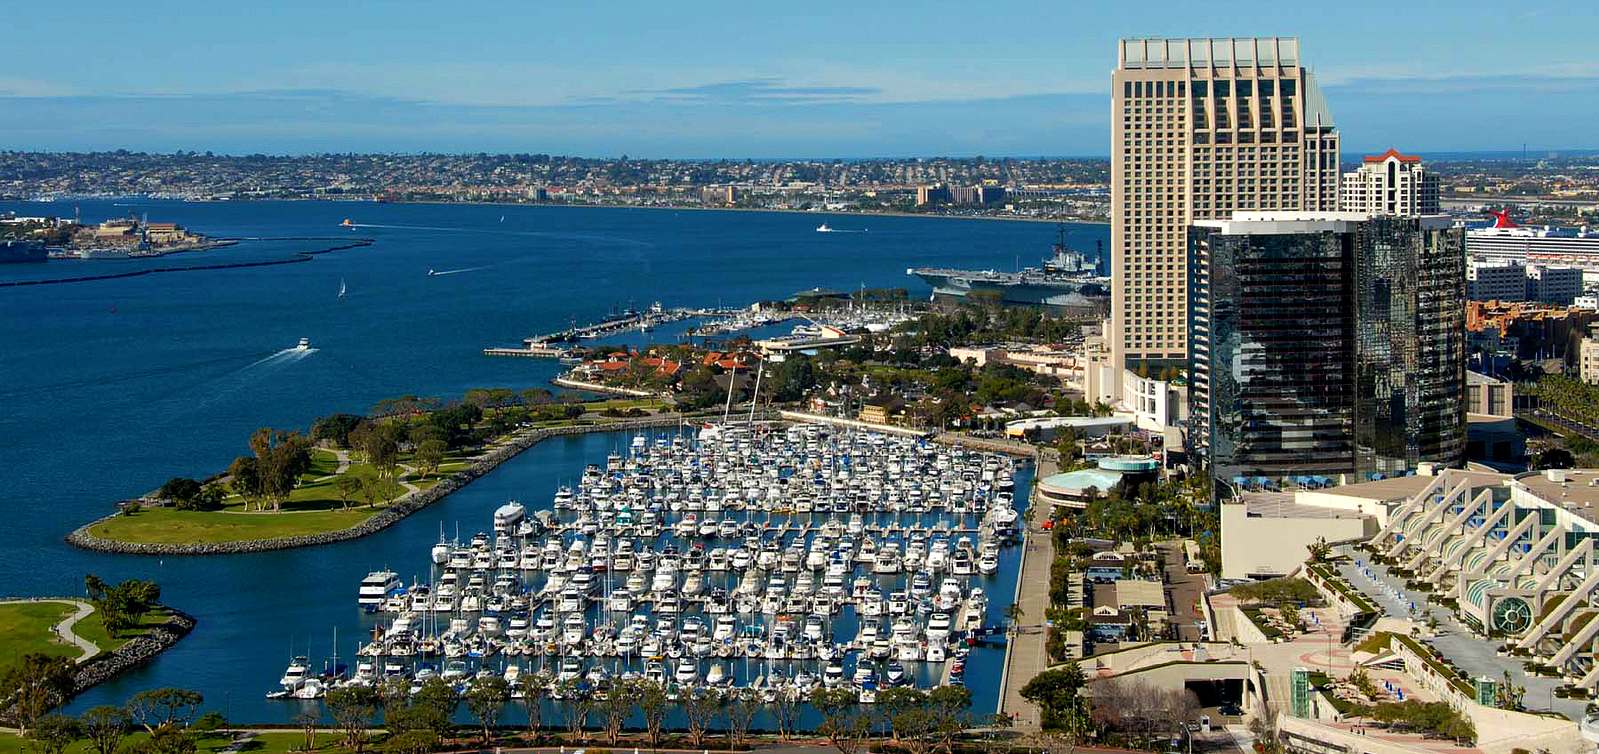 San Diego harbor and marina